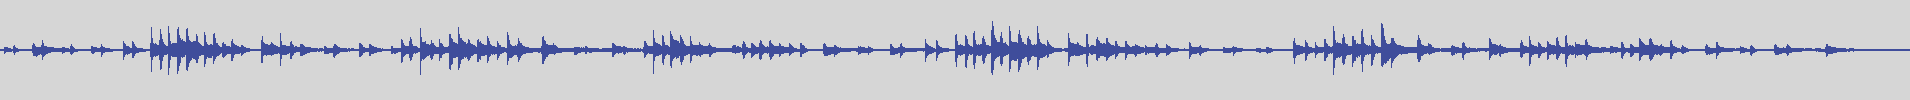 big_music_classic [BMC005] Erik Satie, Corrado Rossi - Gymnopedie N.3 [] audio wave form